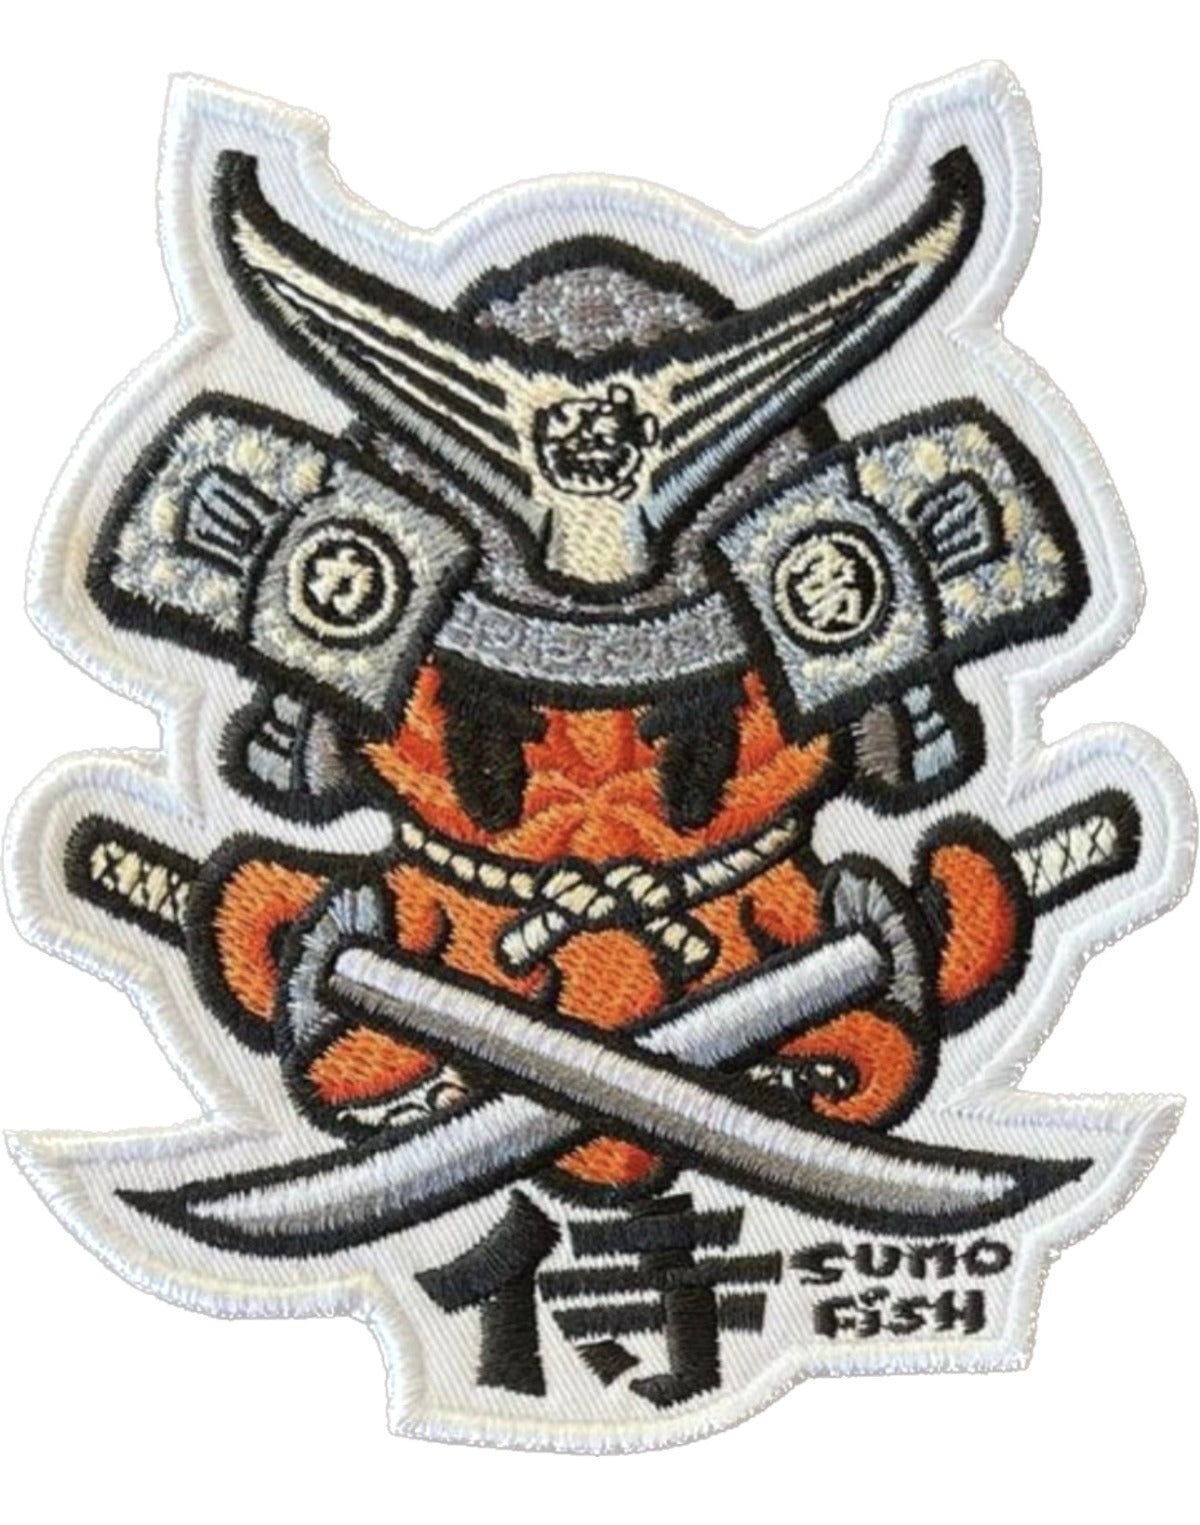 Sumofish Tako Samurai 3.75" x 4" Patch